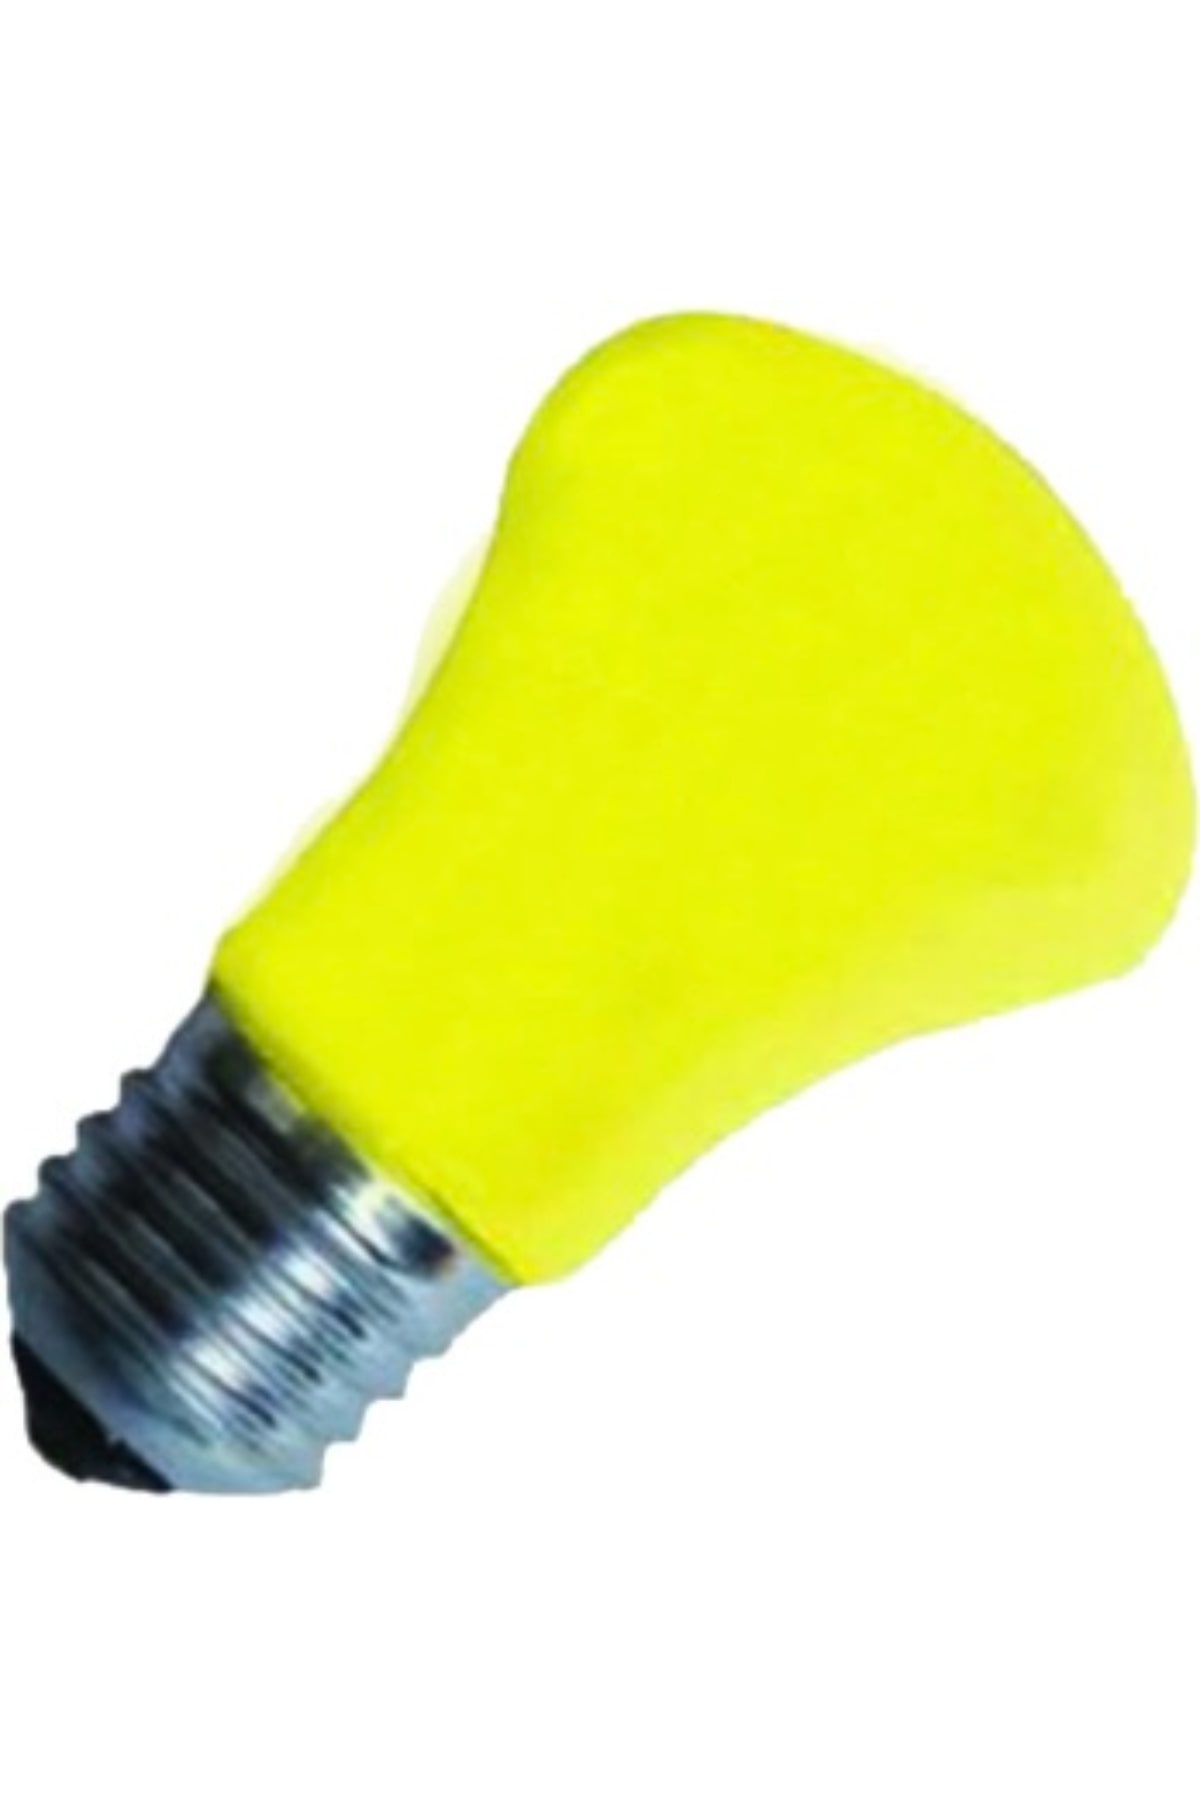 İtalyano Mantar Sarı Gece Lambası Ampul 10W E27*10X60 - 10-0619 - 2345